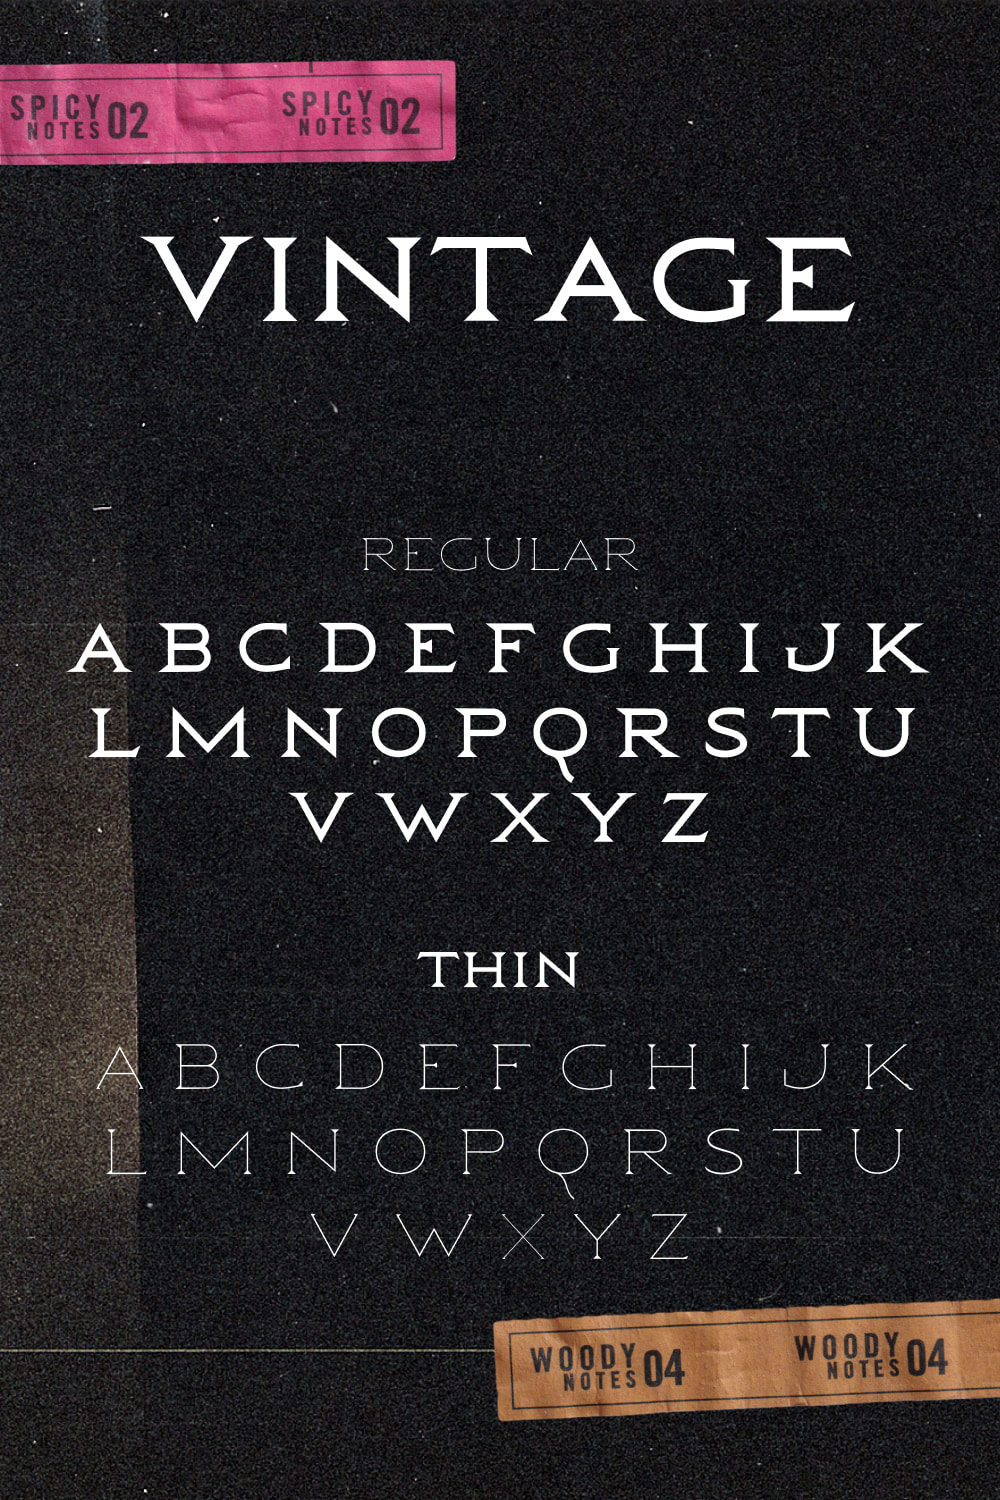 Retro vintage font of pinterest.